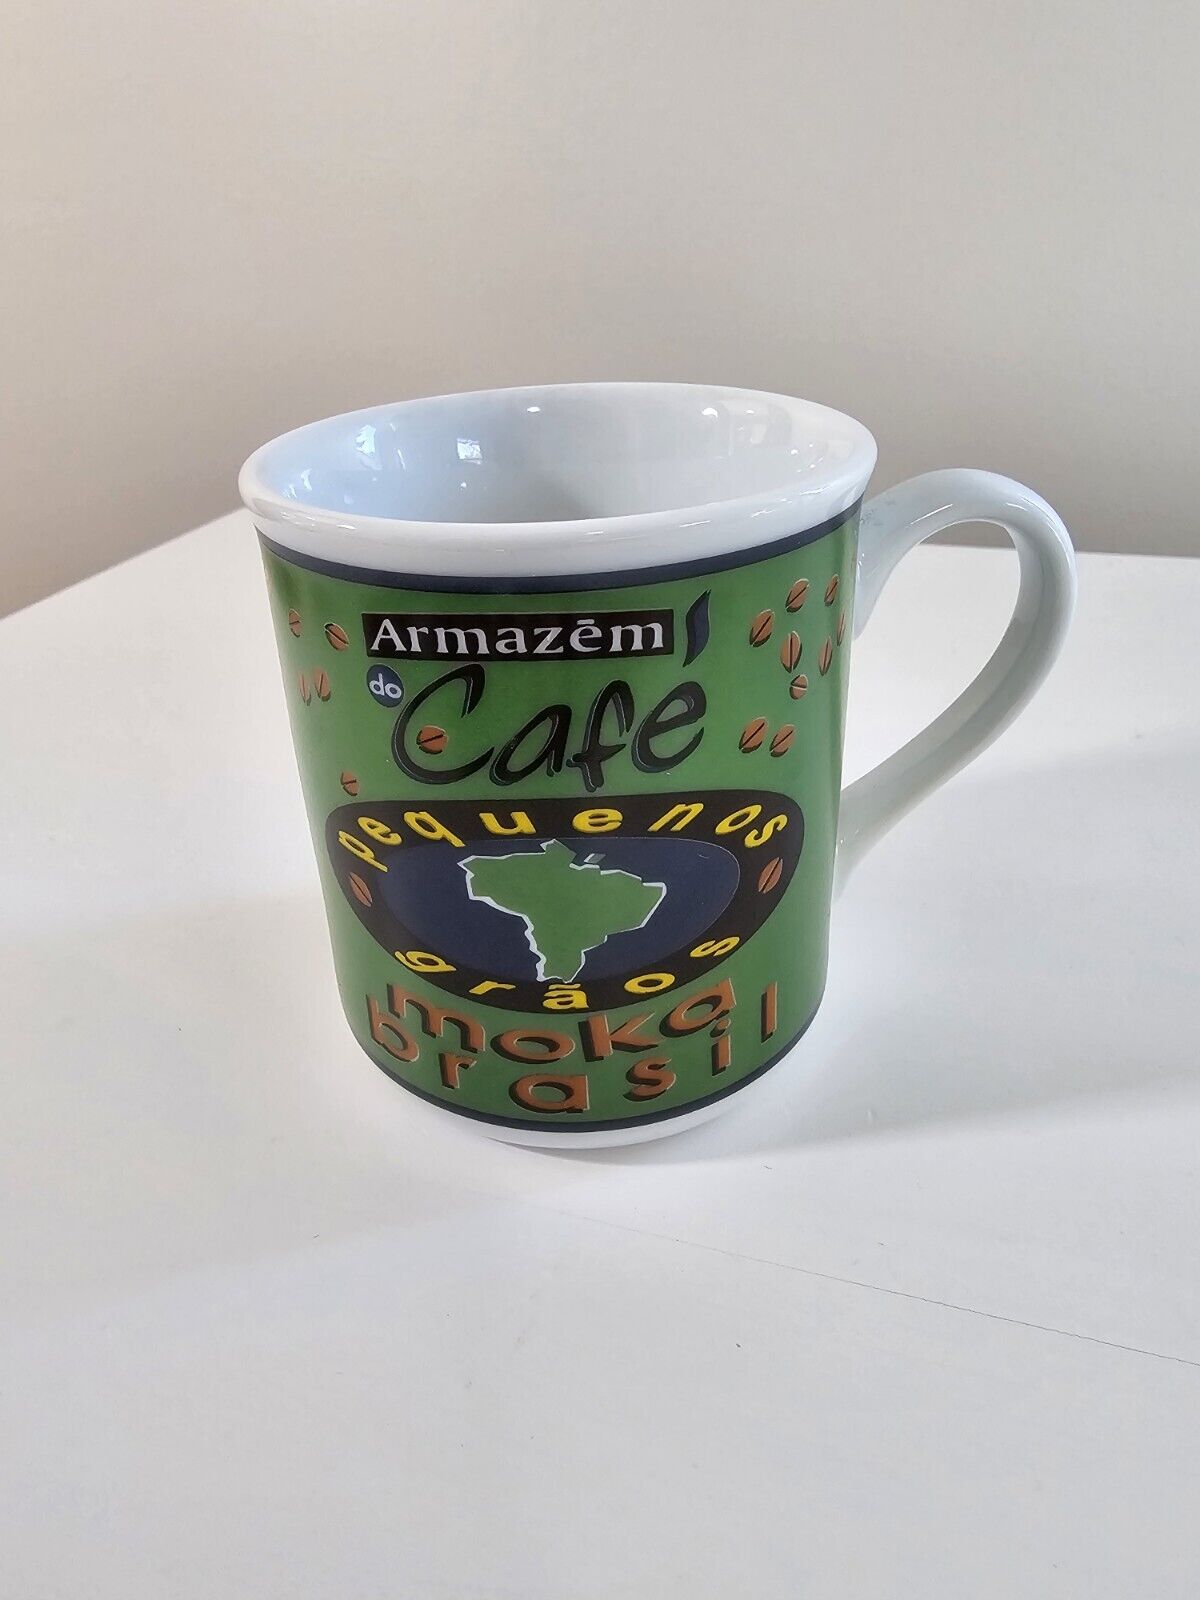 Vintage Porcelana Schmidt Brazil Armazem Cafe Collector Cup Decorated With Beans